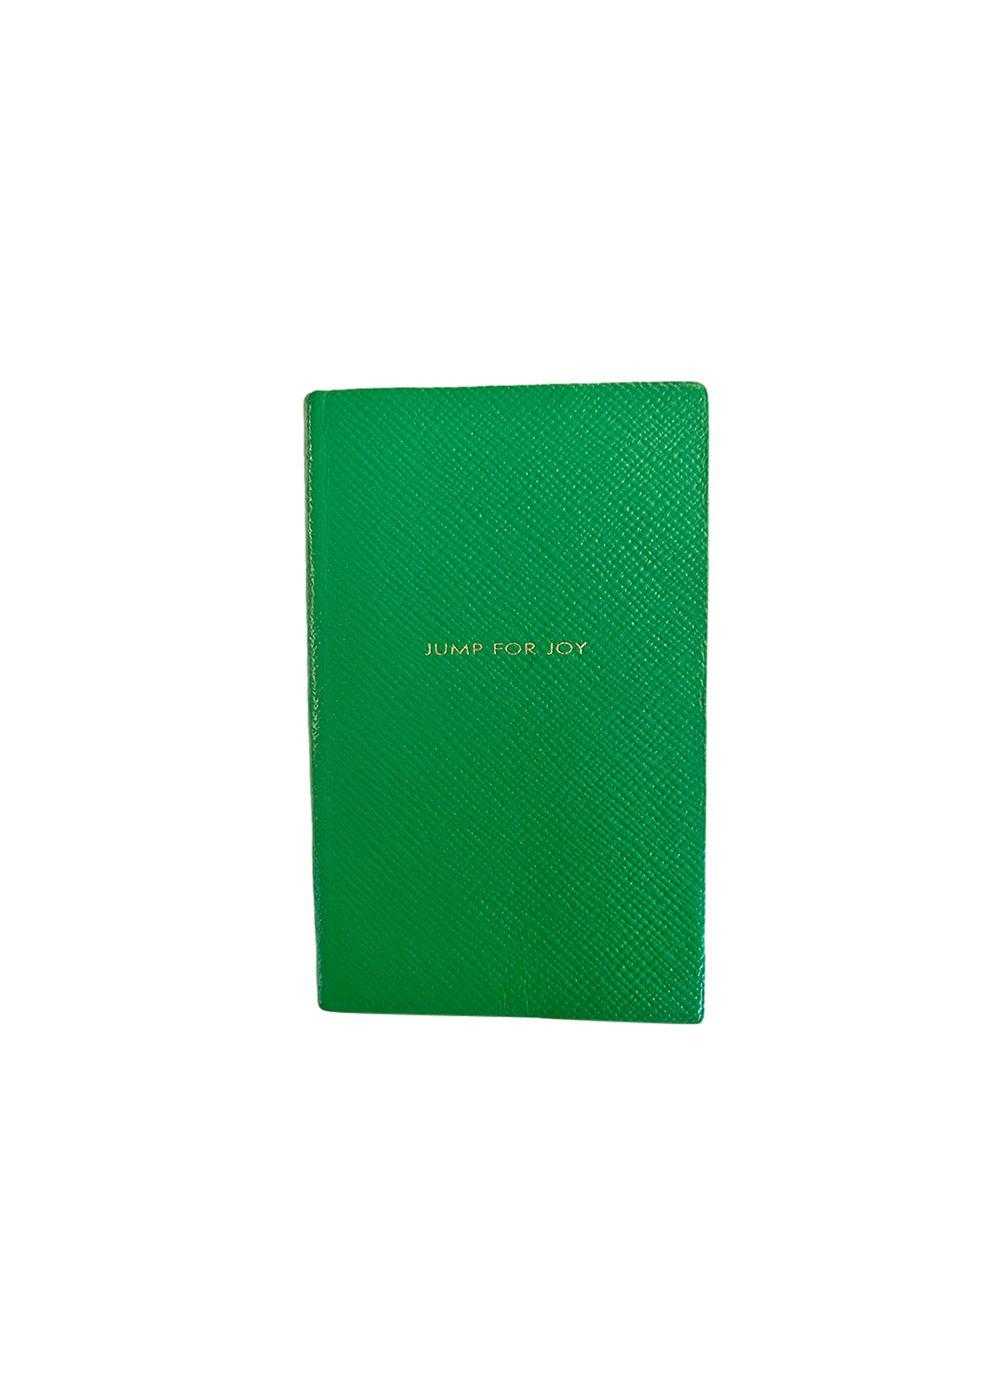 Smythson Green Jump for Joy Notebook - image 1